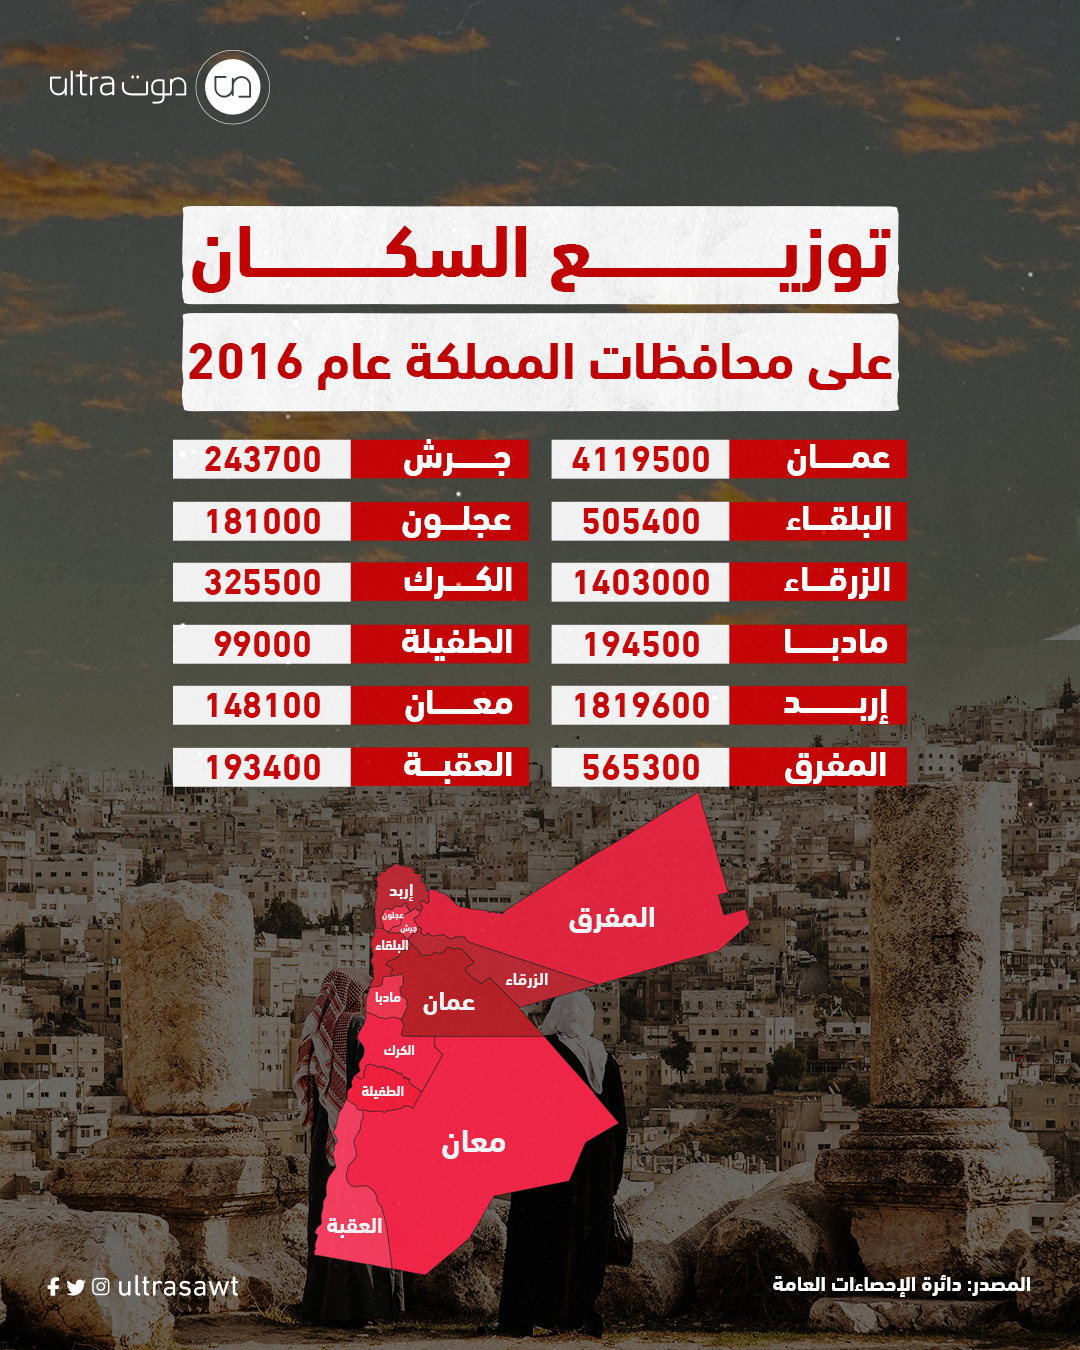 Population density in Jordan